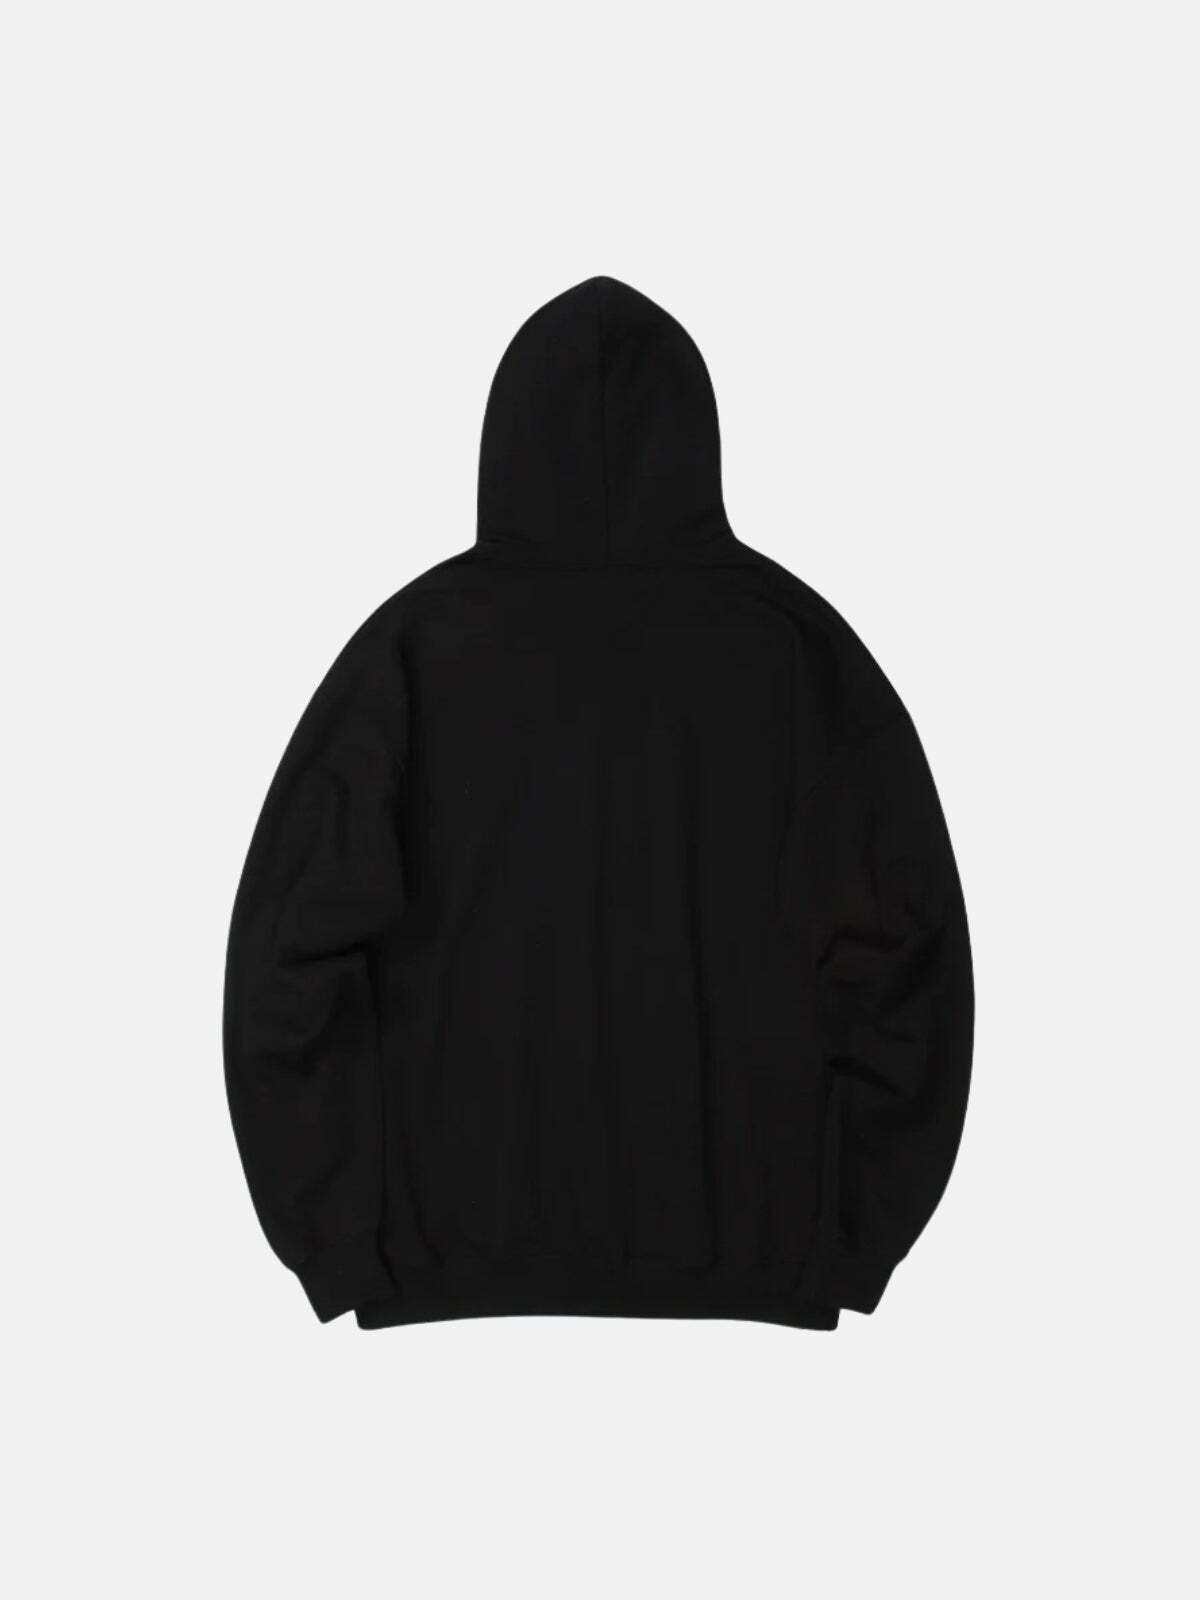 illusion letter print hoodie edgy y2k streetwear icon 4016